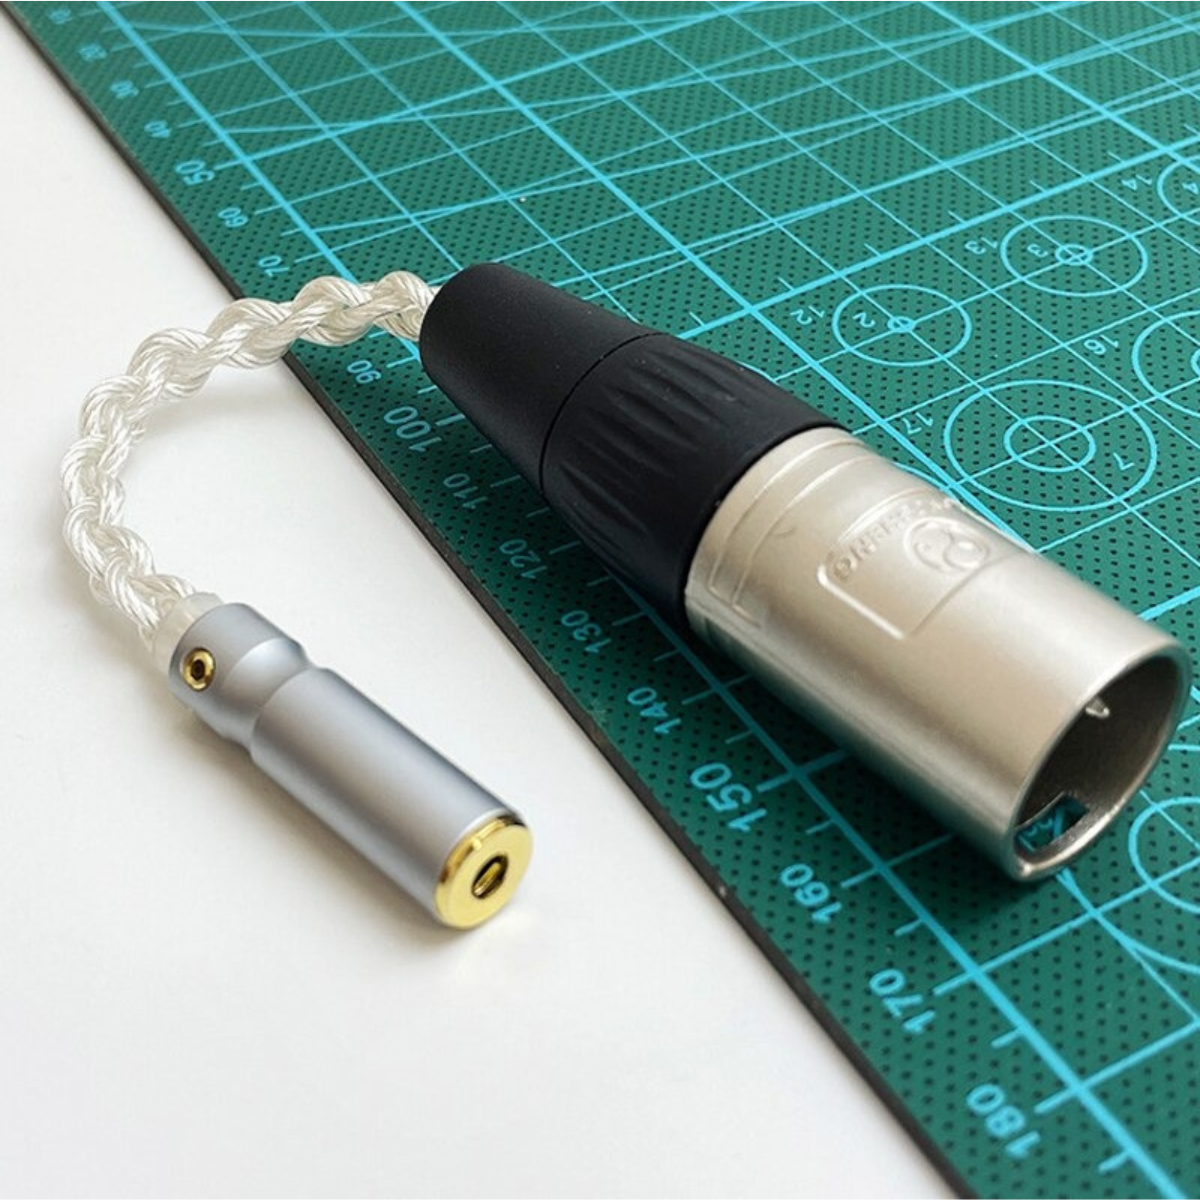 Tiandirenhe XLR Male Adapter Cable